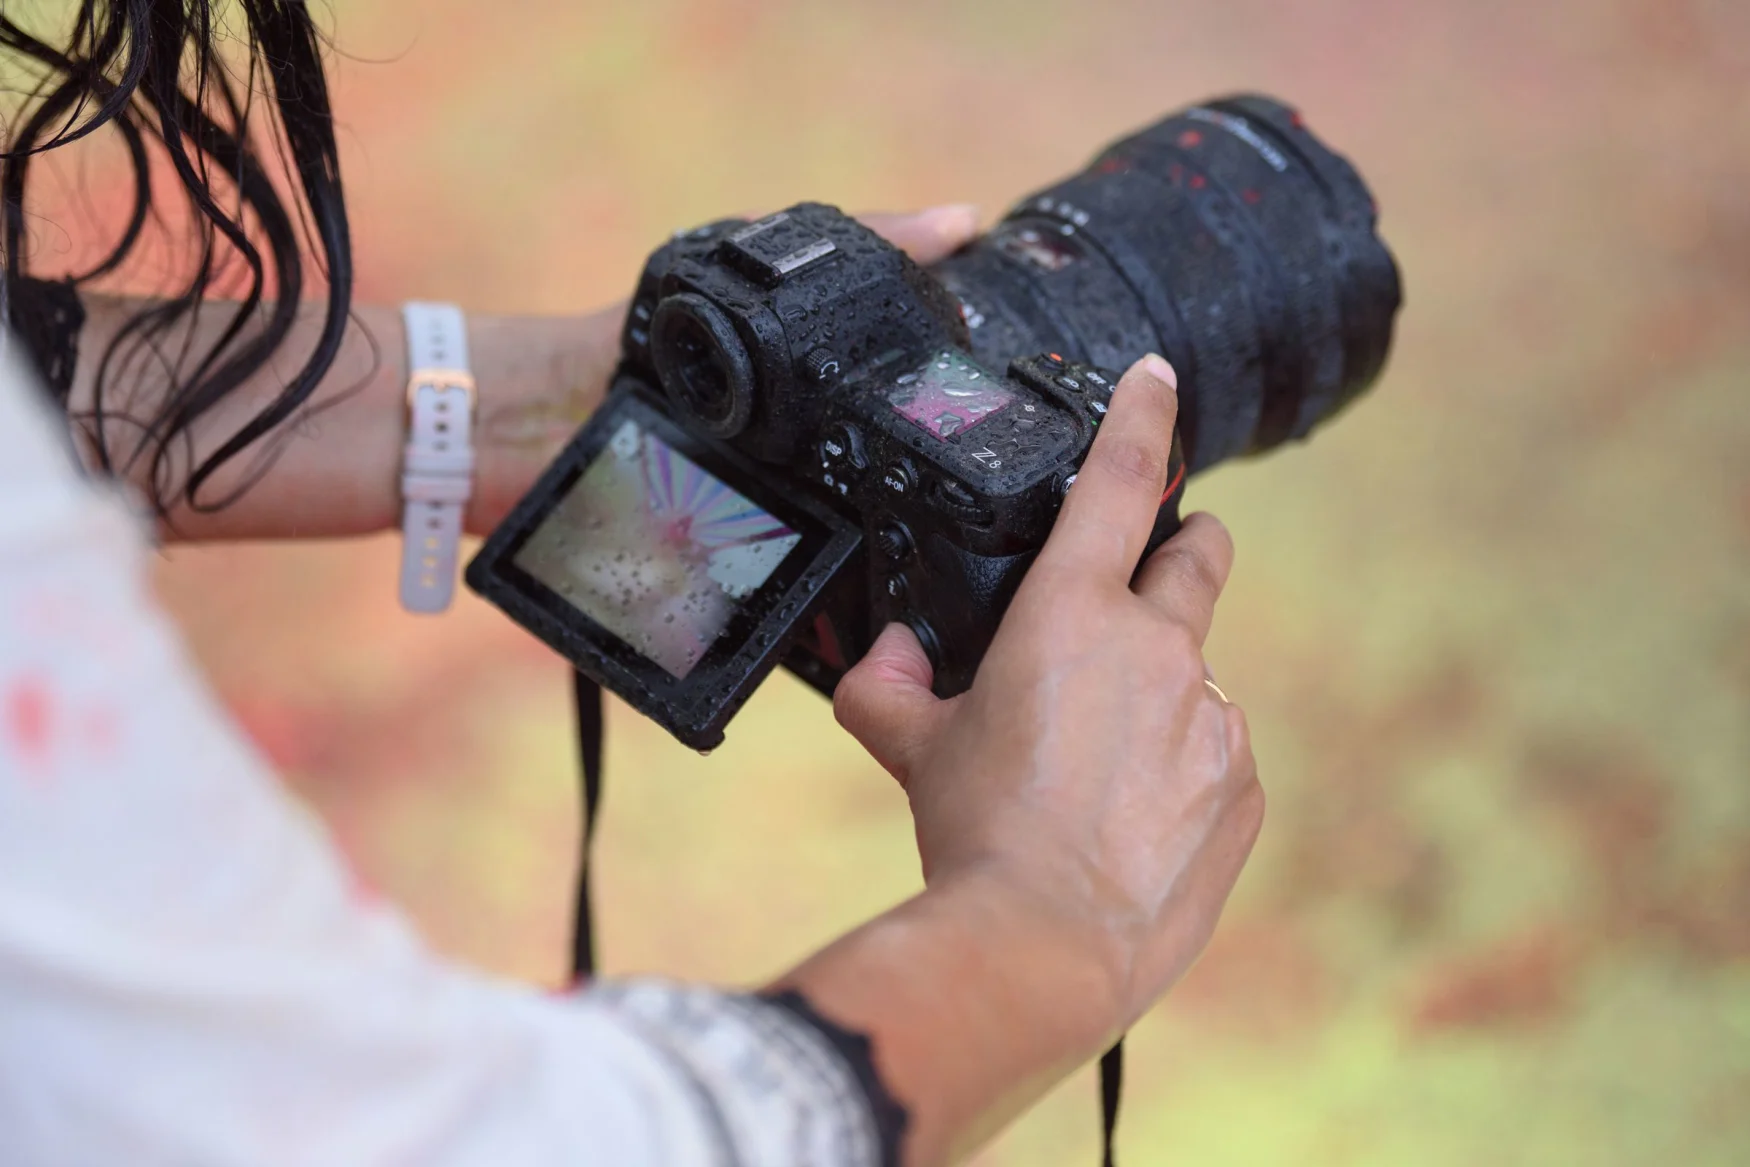 Nikon's Z8 mirrorless camera offers 8K60p RAW video and 20fps burst speeds